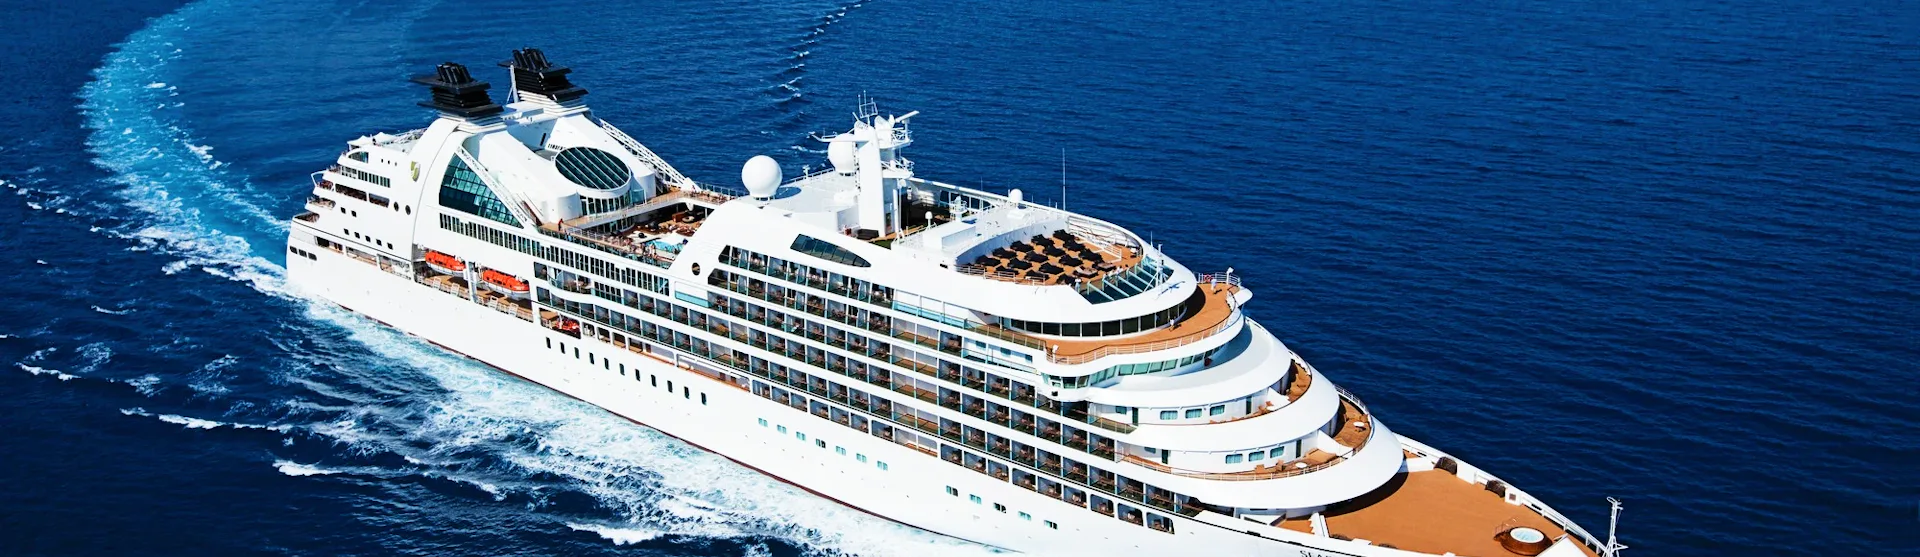 Seabourn Quest - Seabourn Cruises